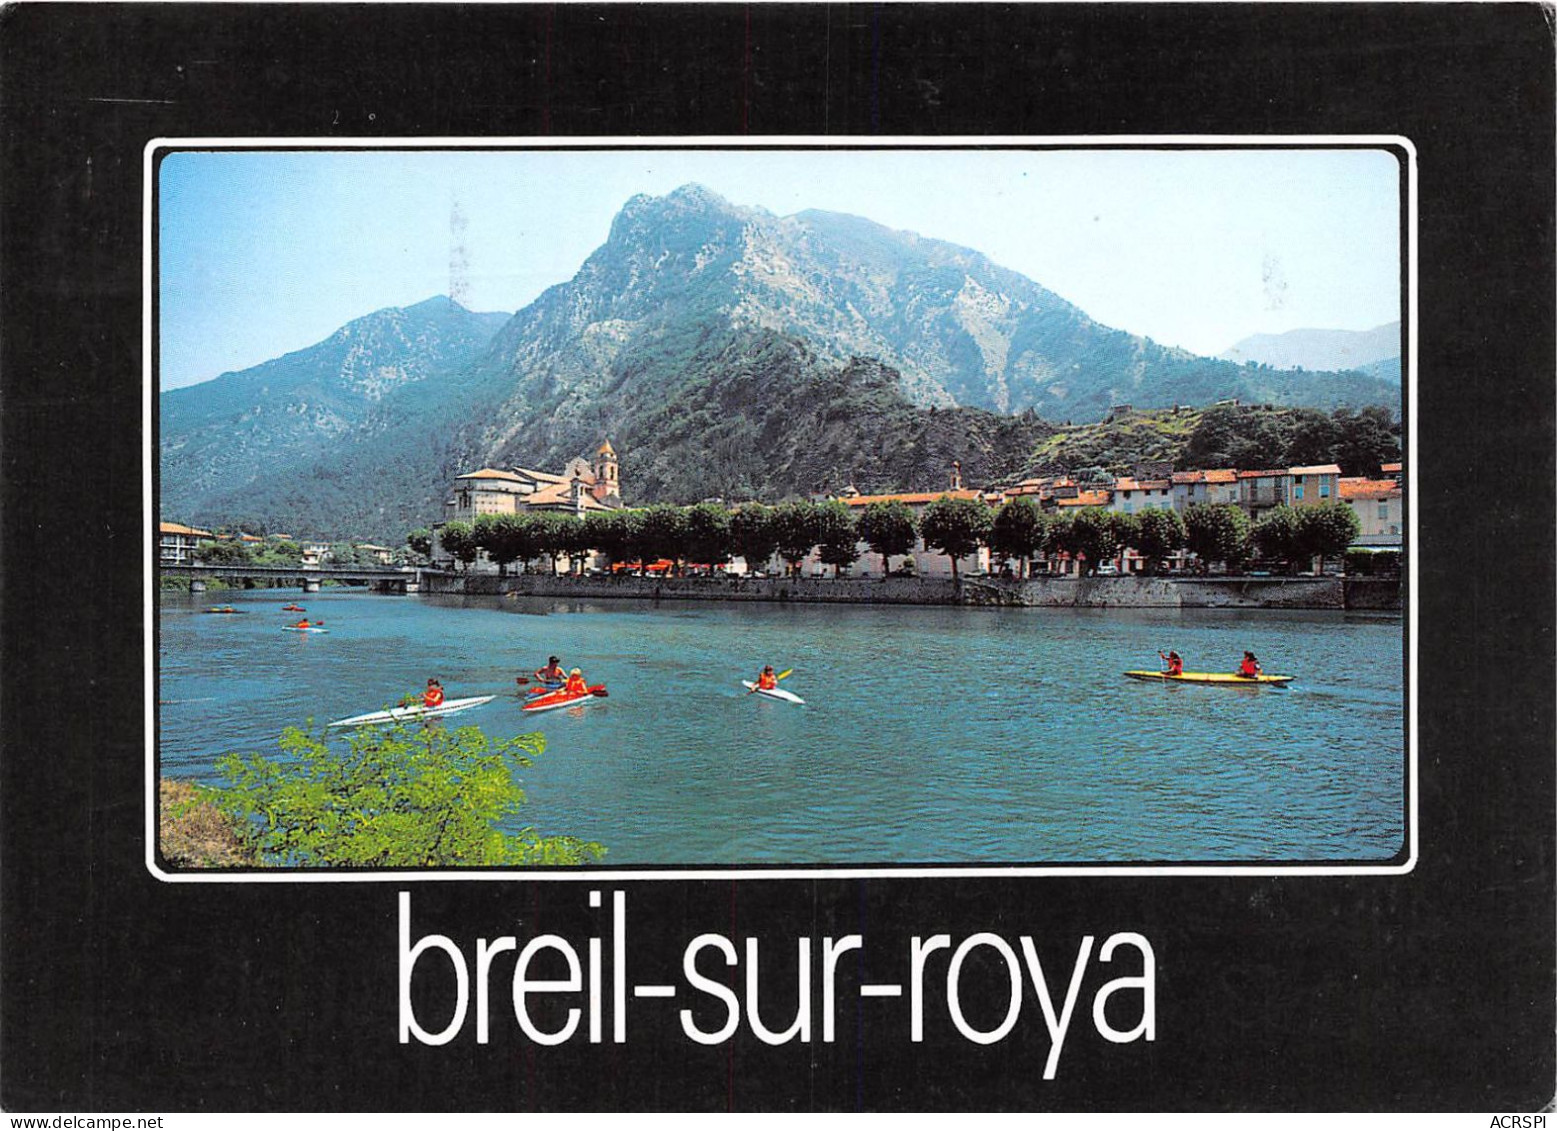 BREIL SUR ROYA Pittoresque Village De La Vallee De La Roya 35(scan Recto-verso) MA306 - Breil-sur-Roya